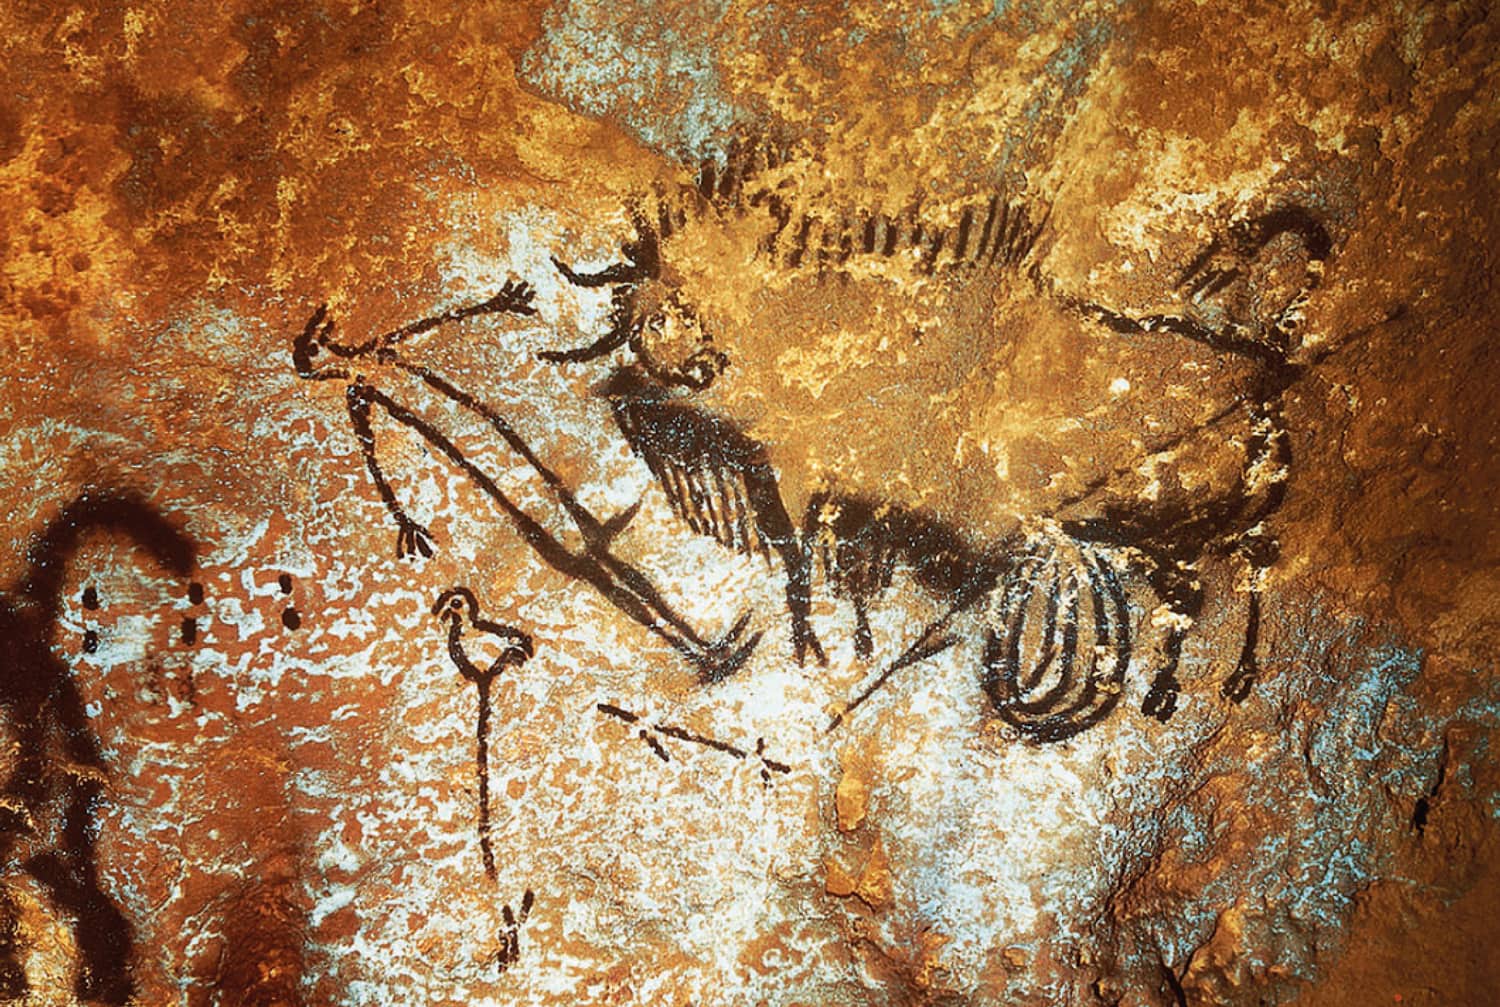 Bird-Headed Man with Bison, Lascaux Cave, France, c. 17,000 BP.